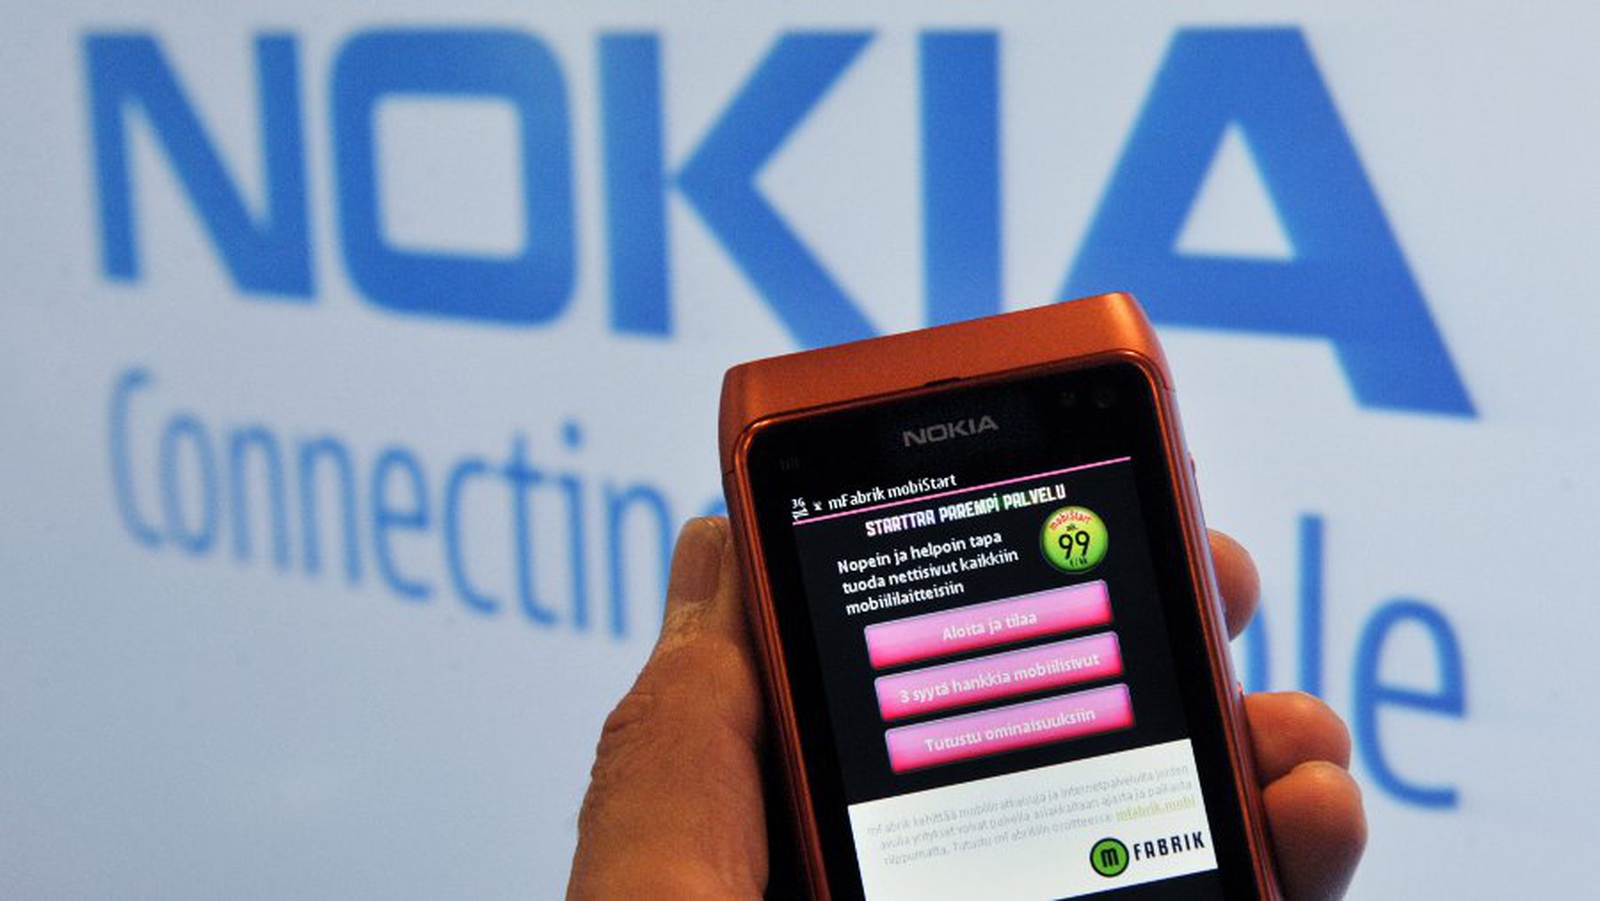 Nokia beats market expectations in Q3